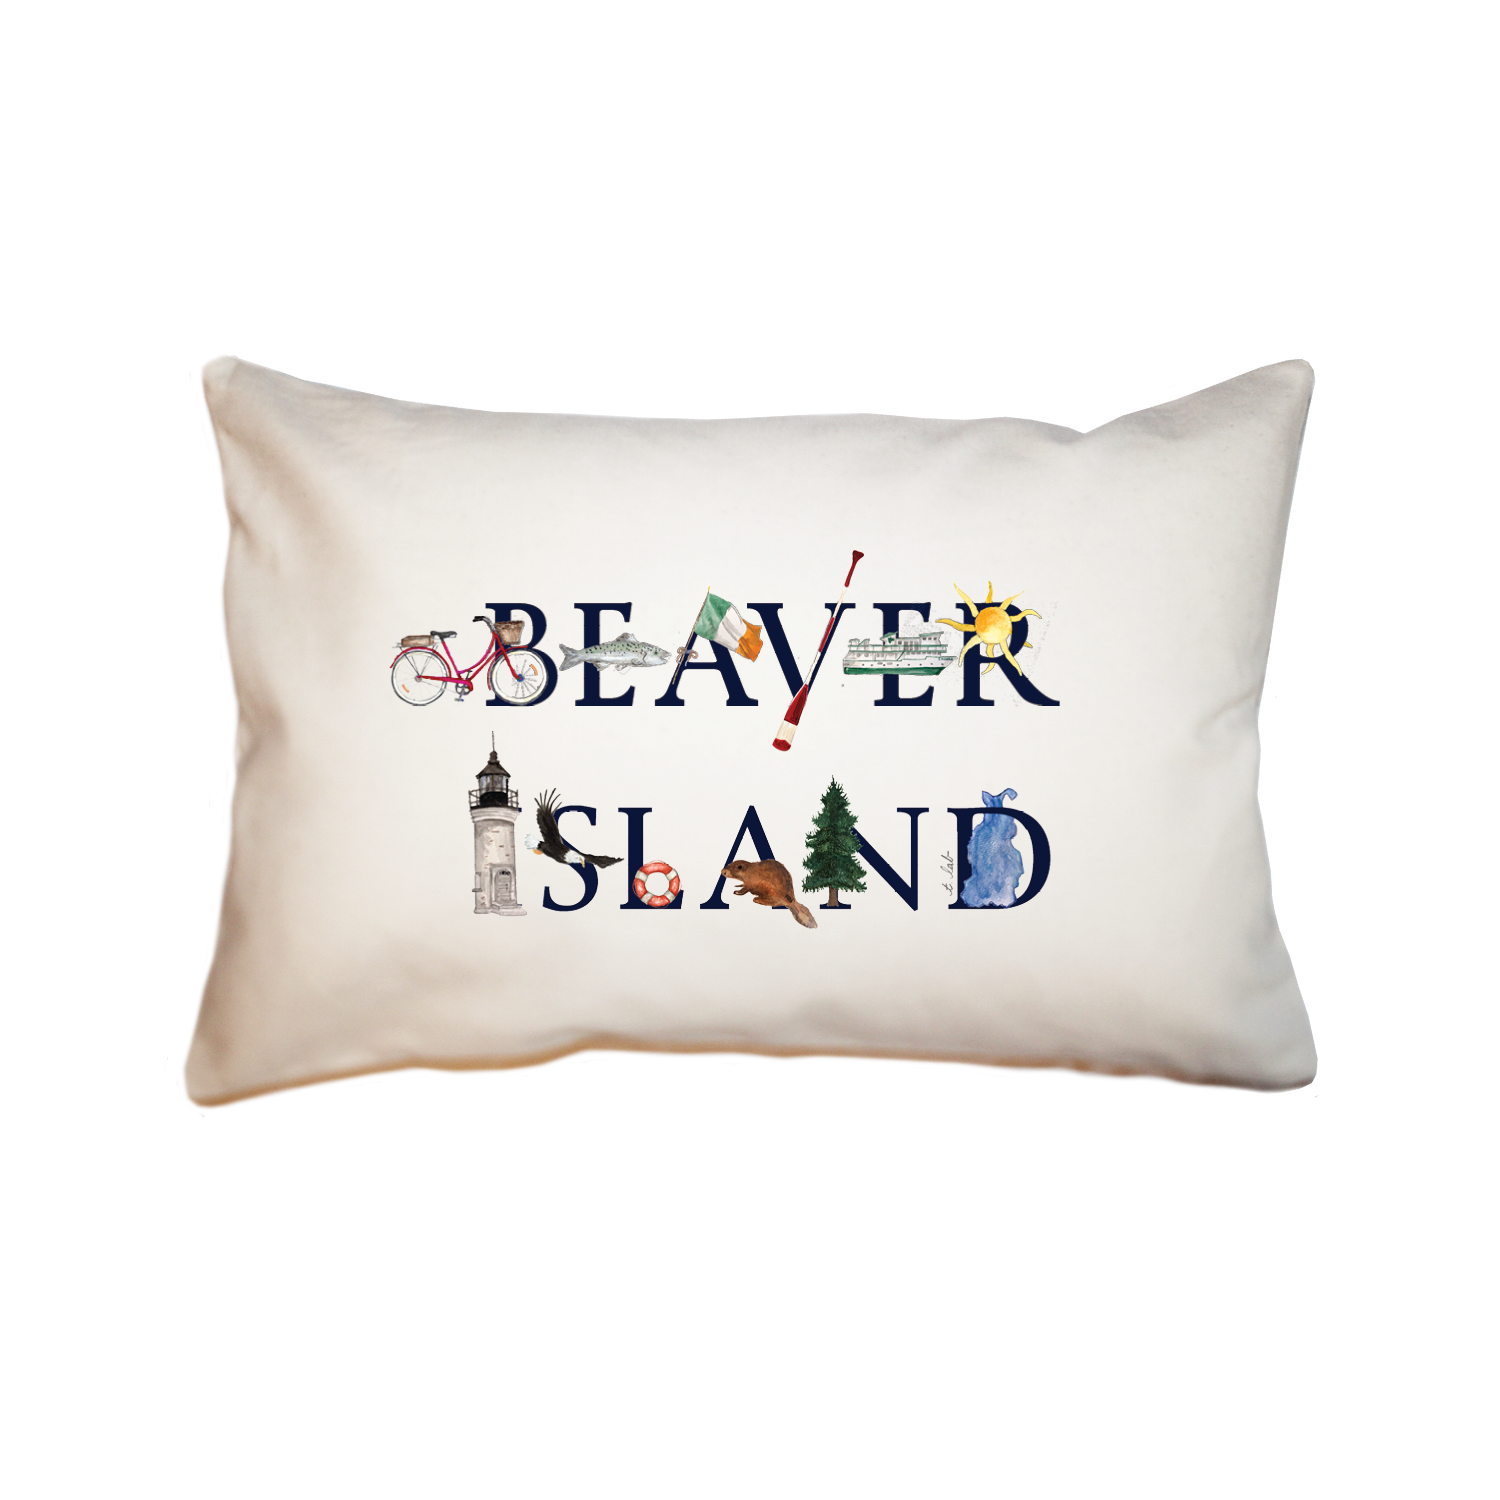 beaver island large rectangle pillow